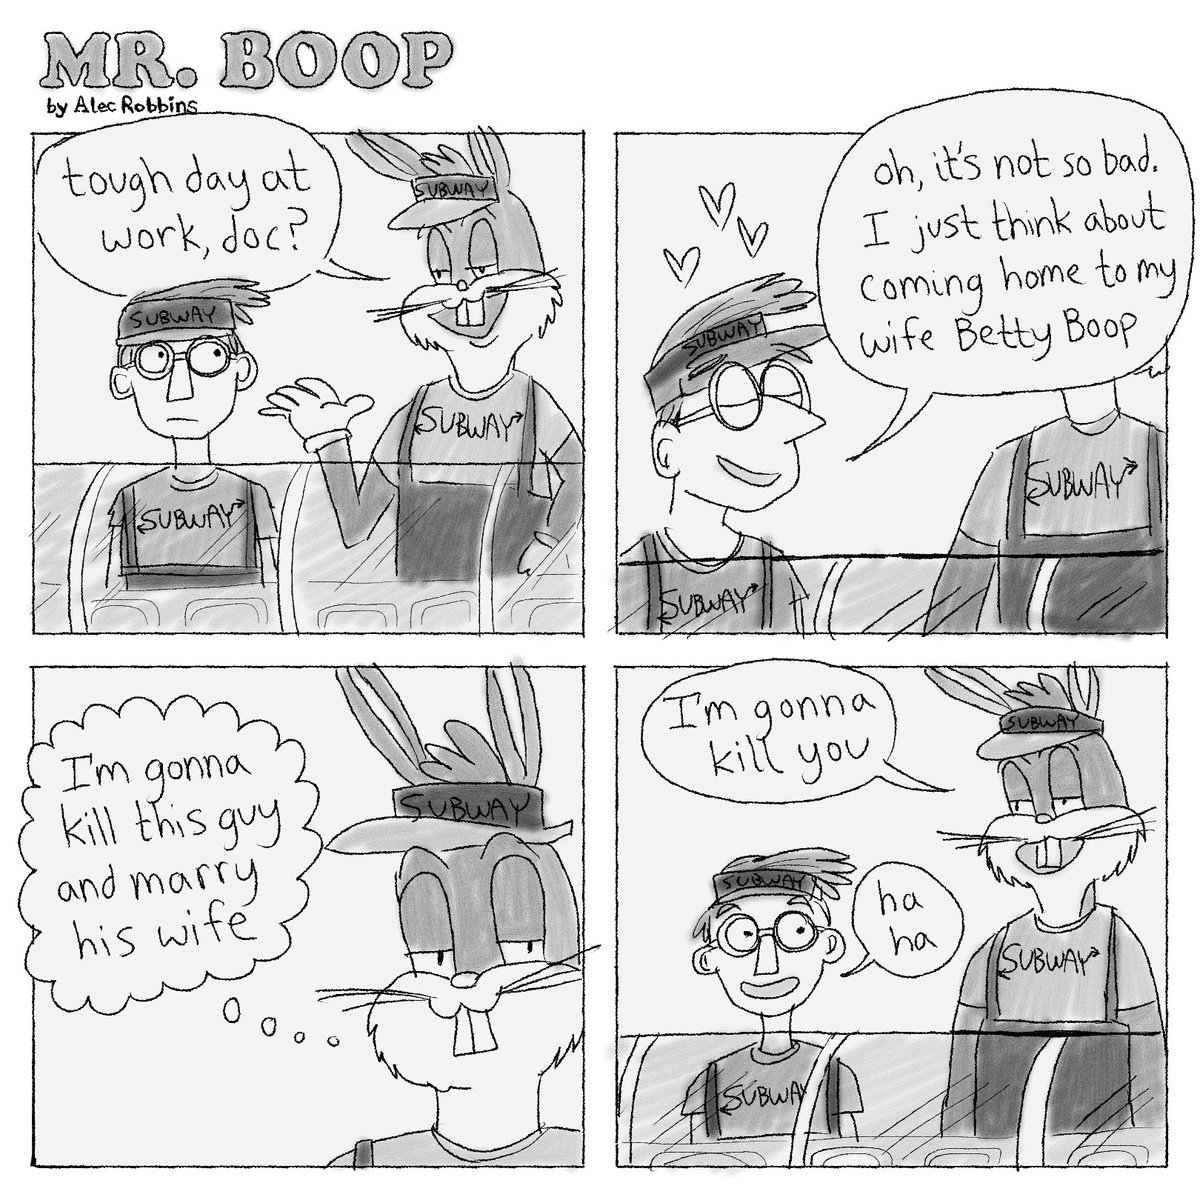 Mr. Boop goes to work